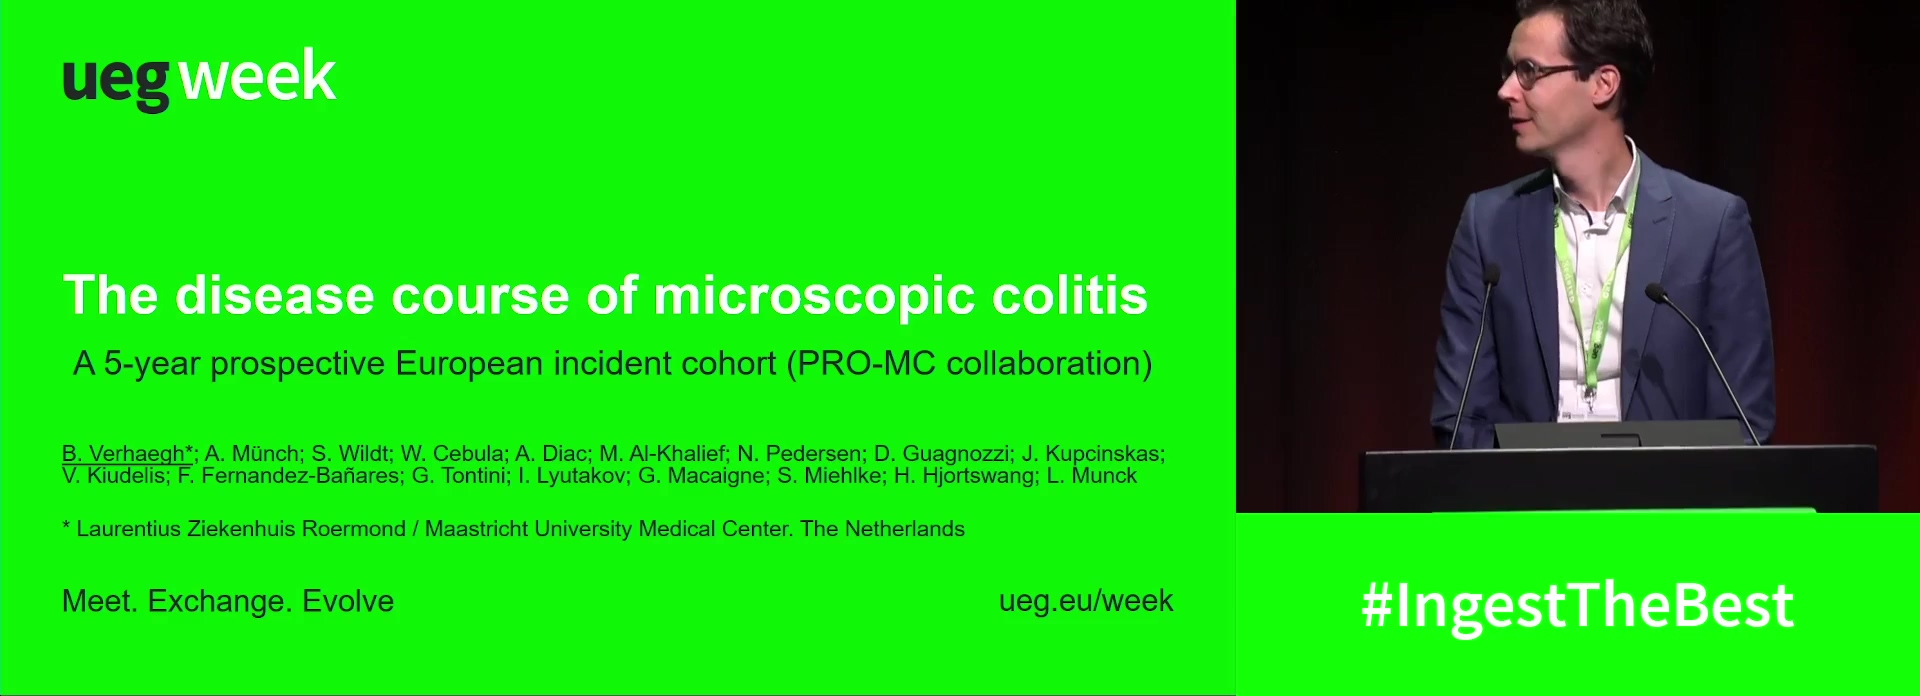 THE DISEASE COURSE OF MICROSCOPIC COLITIS – A 5-YEAR PROSPECTIVE EUROPEAN INCIDENCE COHORT (PRO-MC)